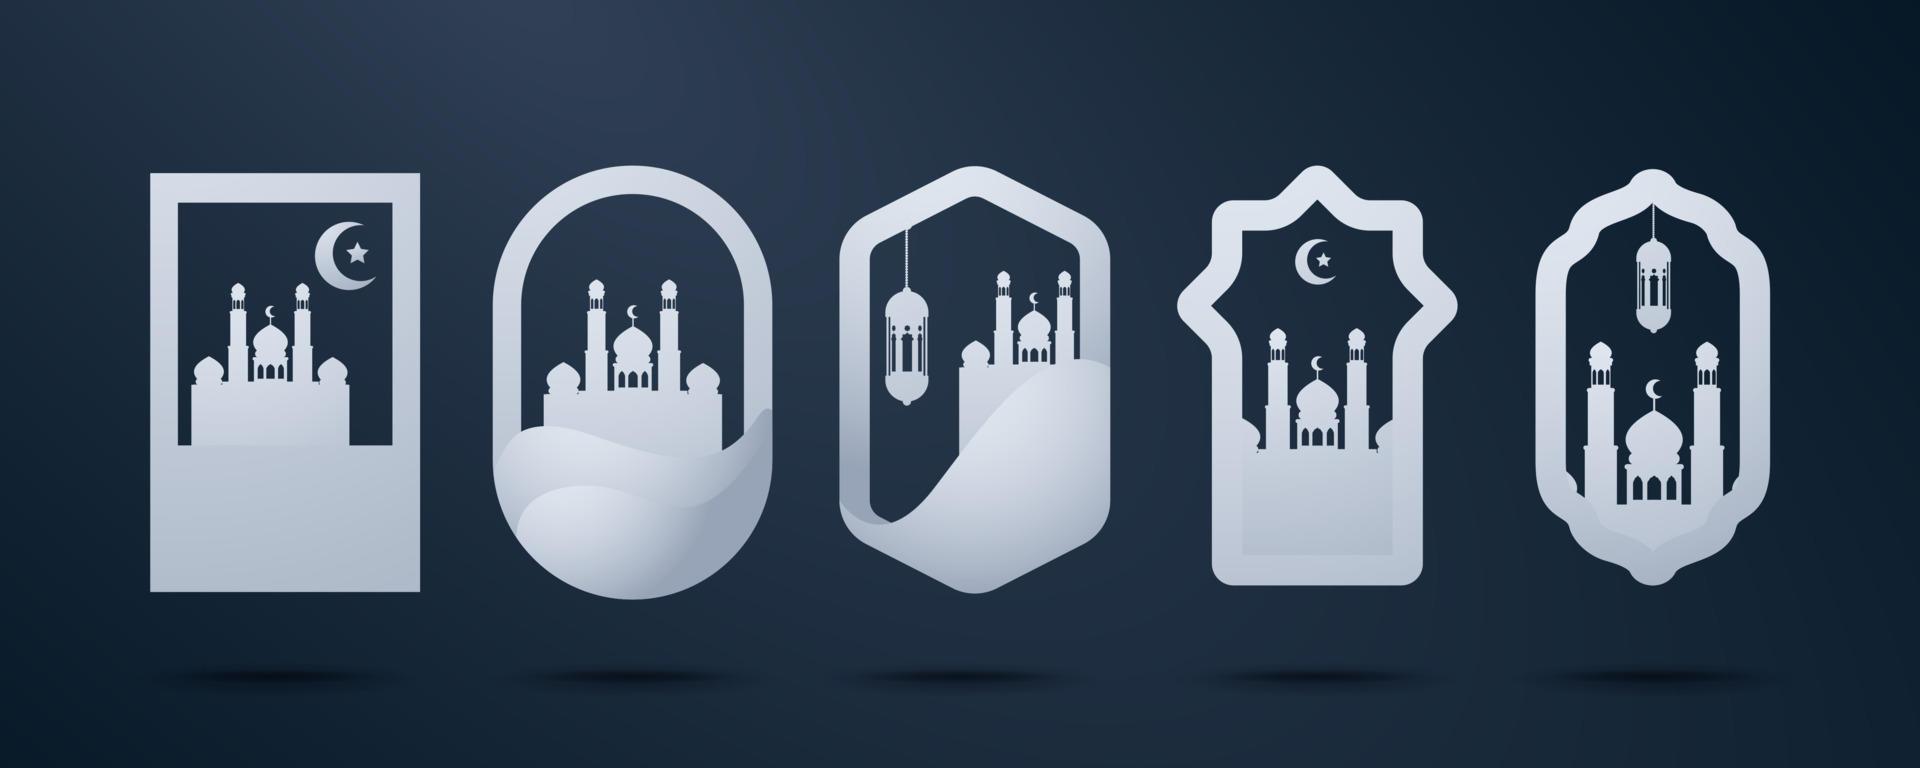 ilustração em vetor distintivo islâmico premium